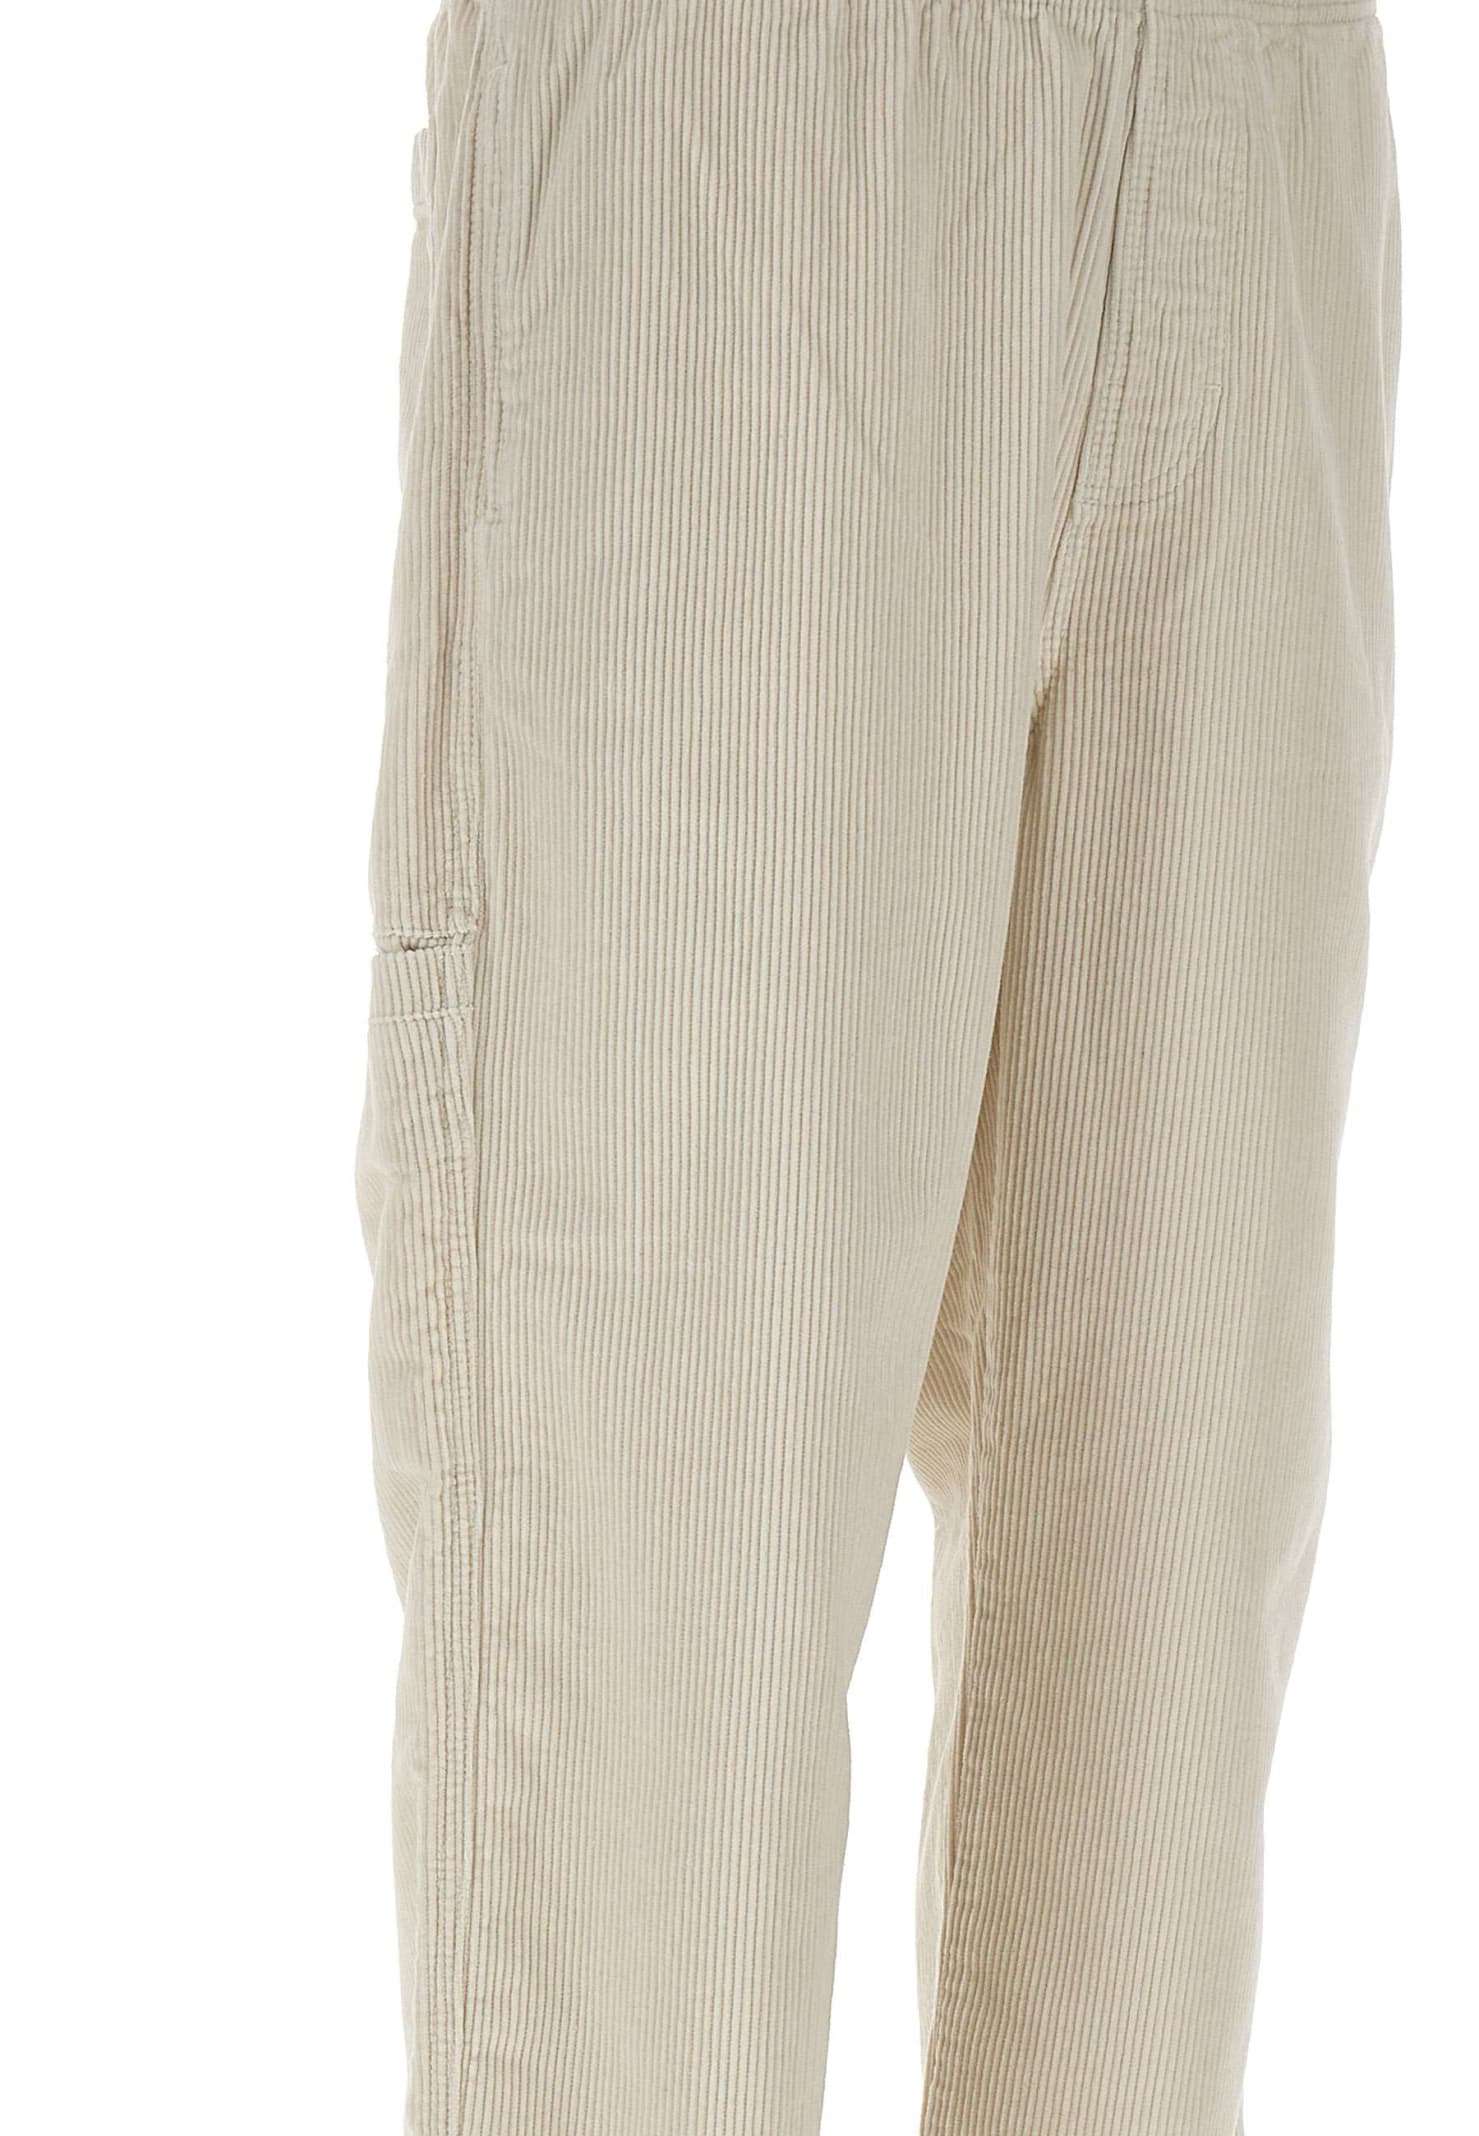 Stussy wide Wale Cord Beach Cotton Pants